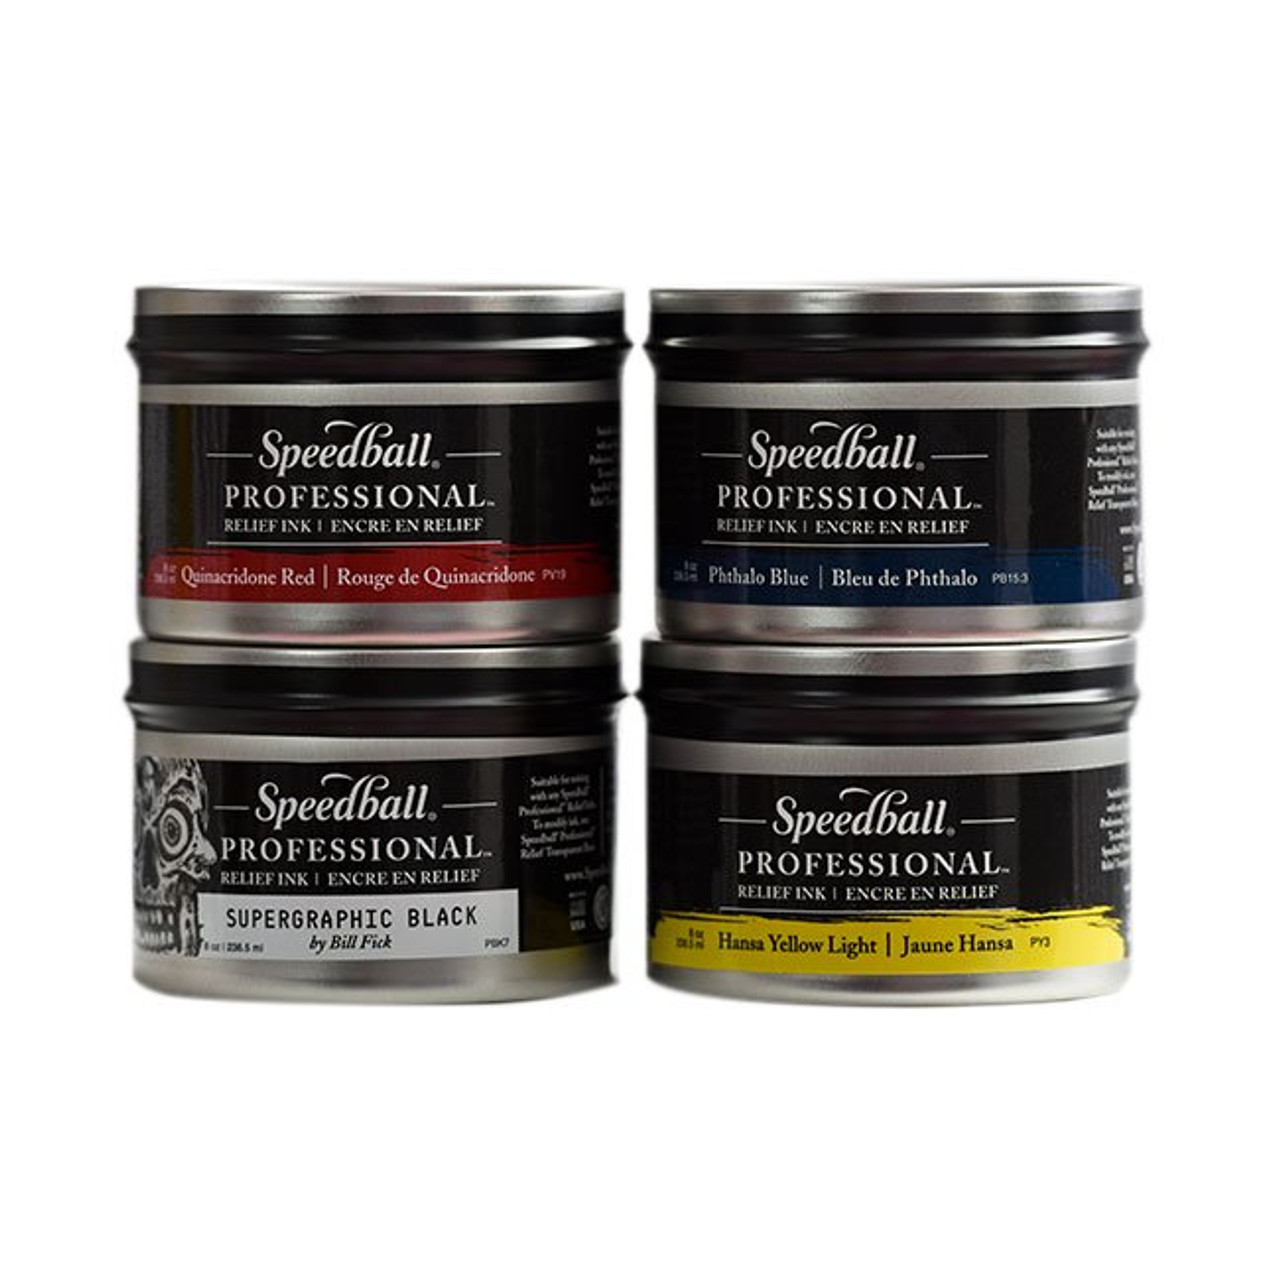 Speedball Oil-Based Block Printing Ink - Artist & Craftsman Supply